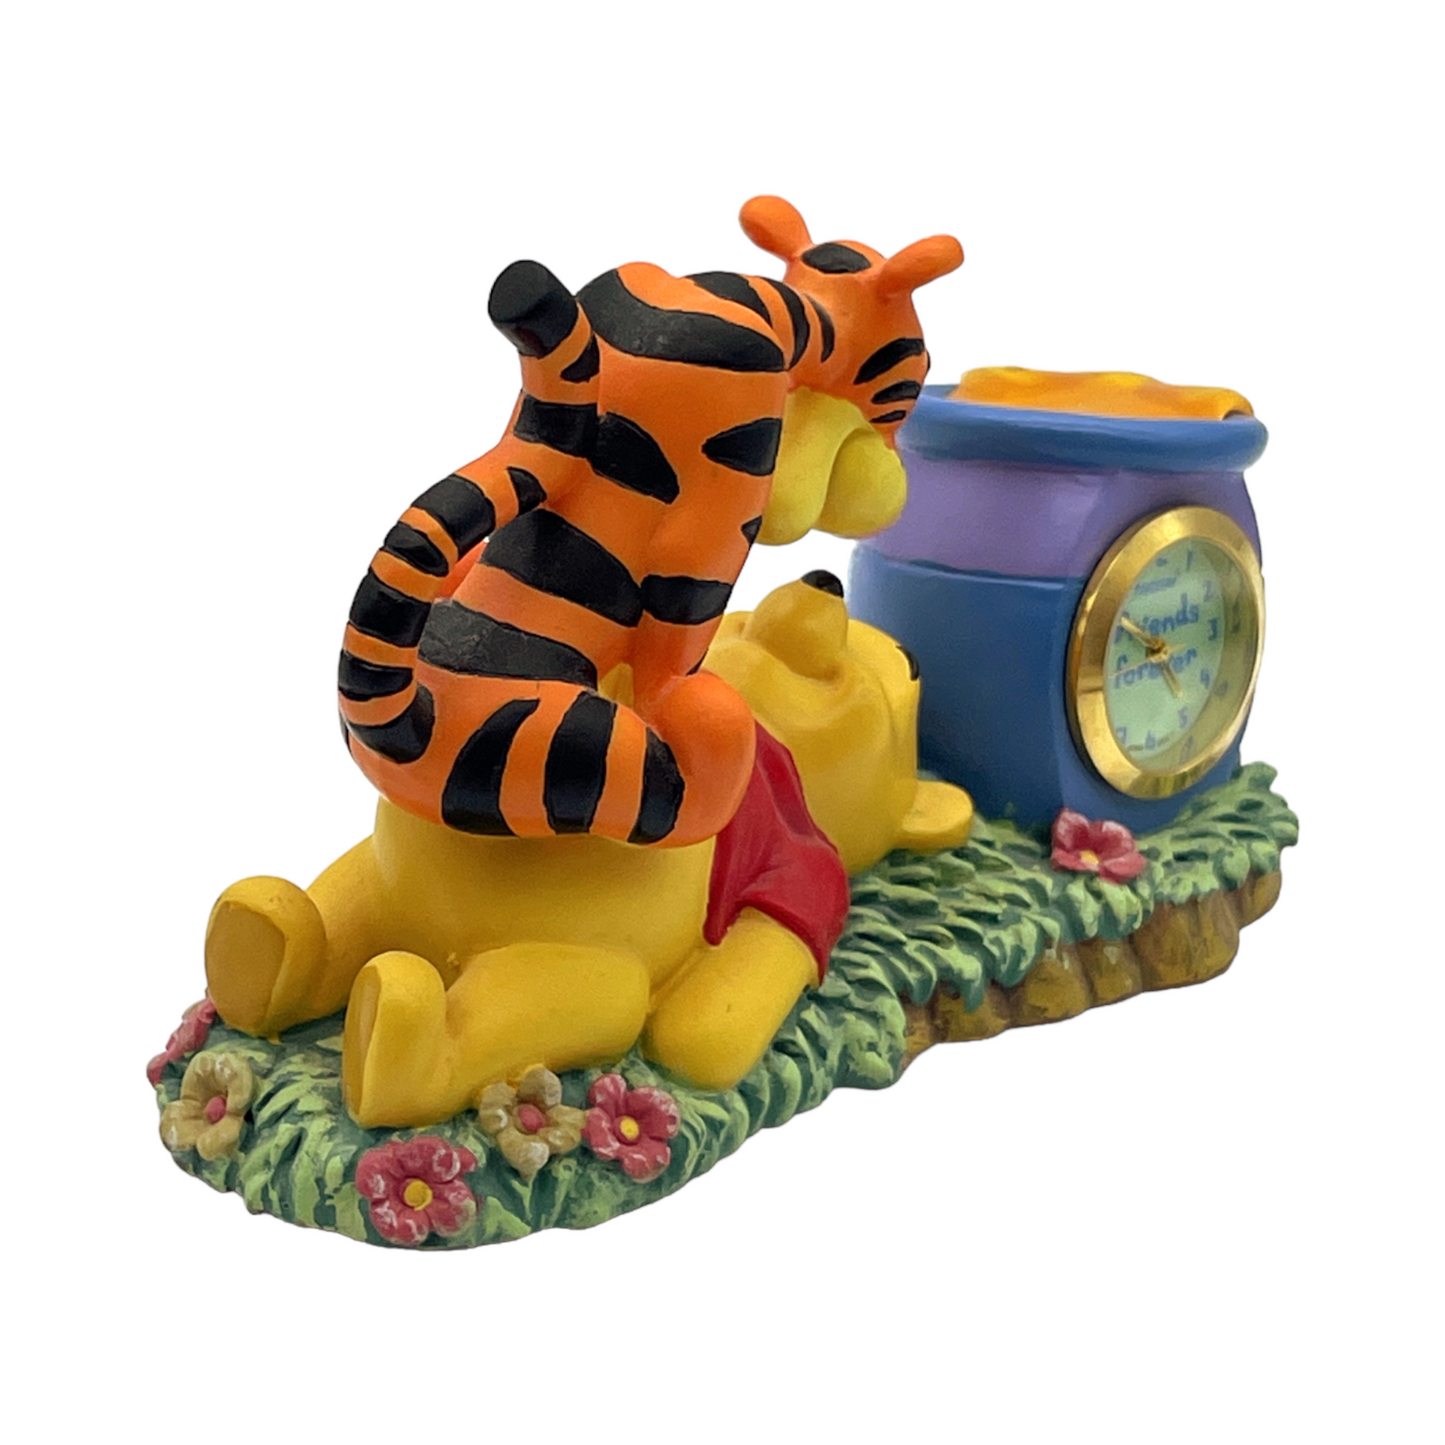 Disney - Winnie the Pooh Miniature Clock - Fantasma Friends Forever - No Box